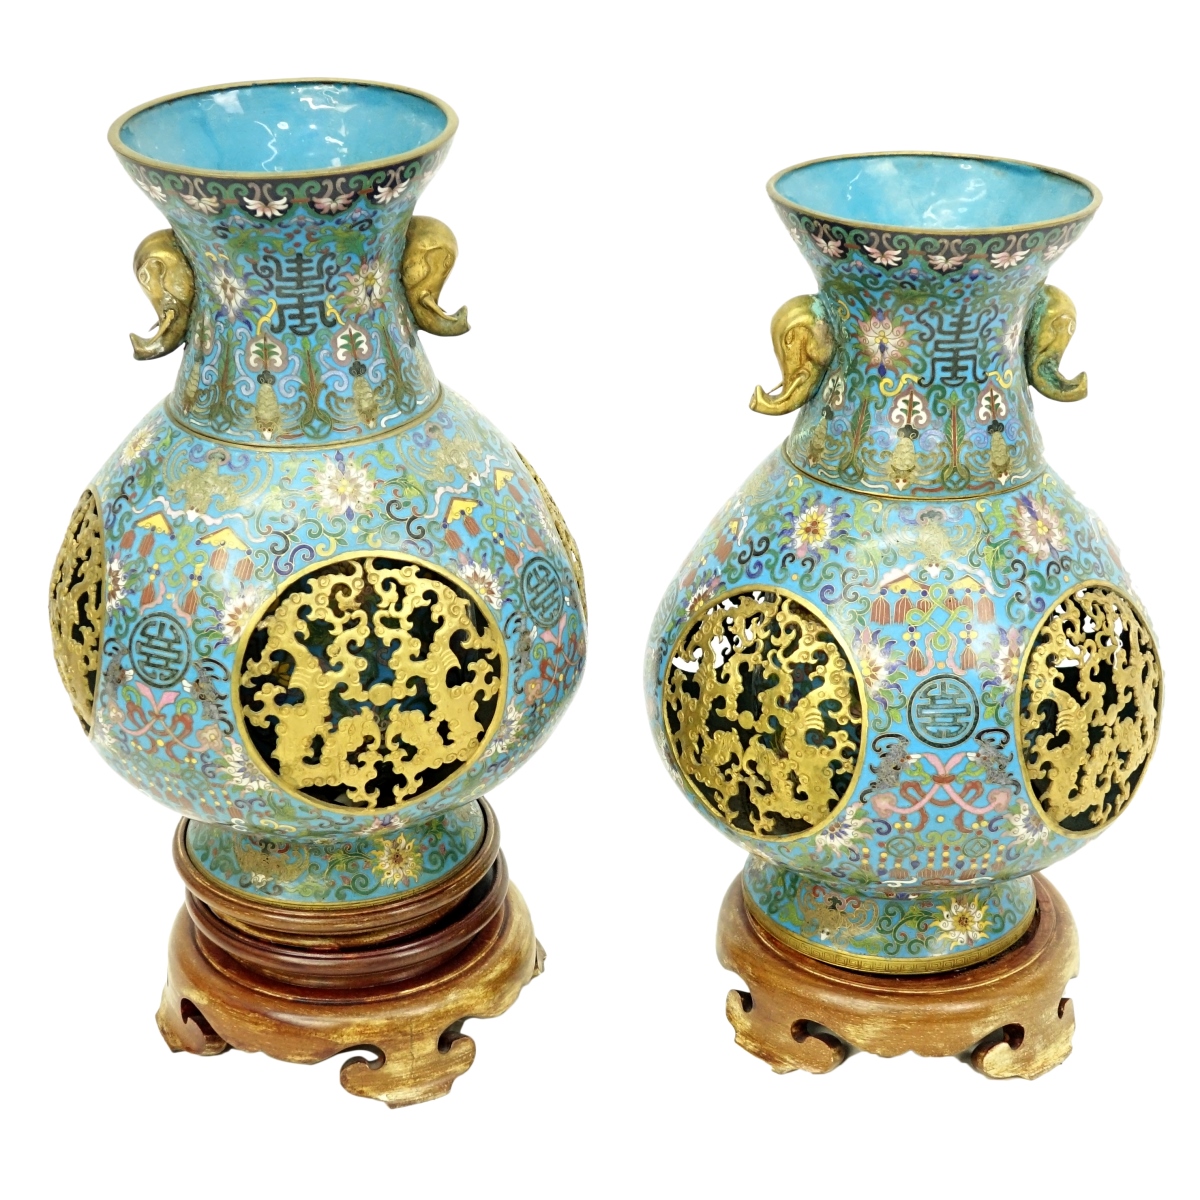 Pair of Impressive Chinese Cloisonne Pierce Vases